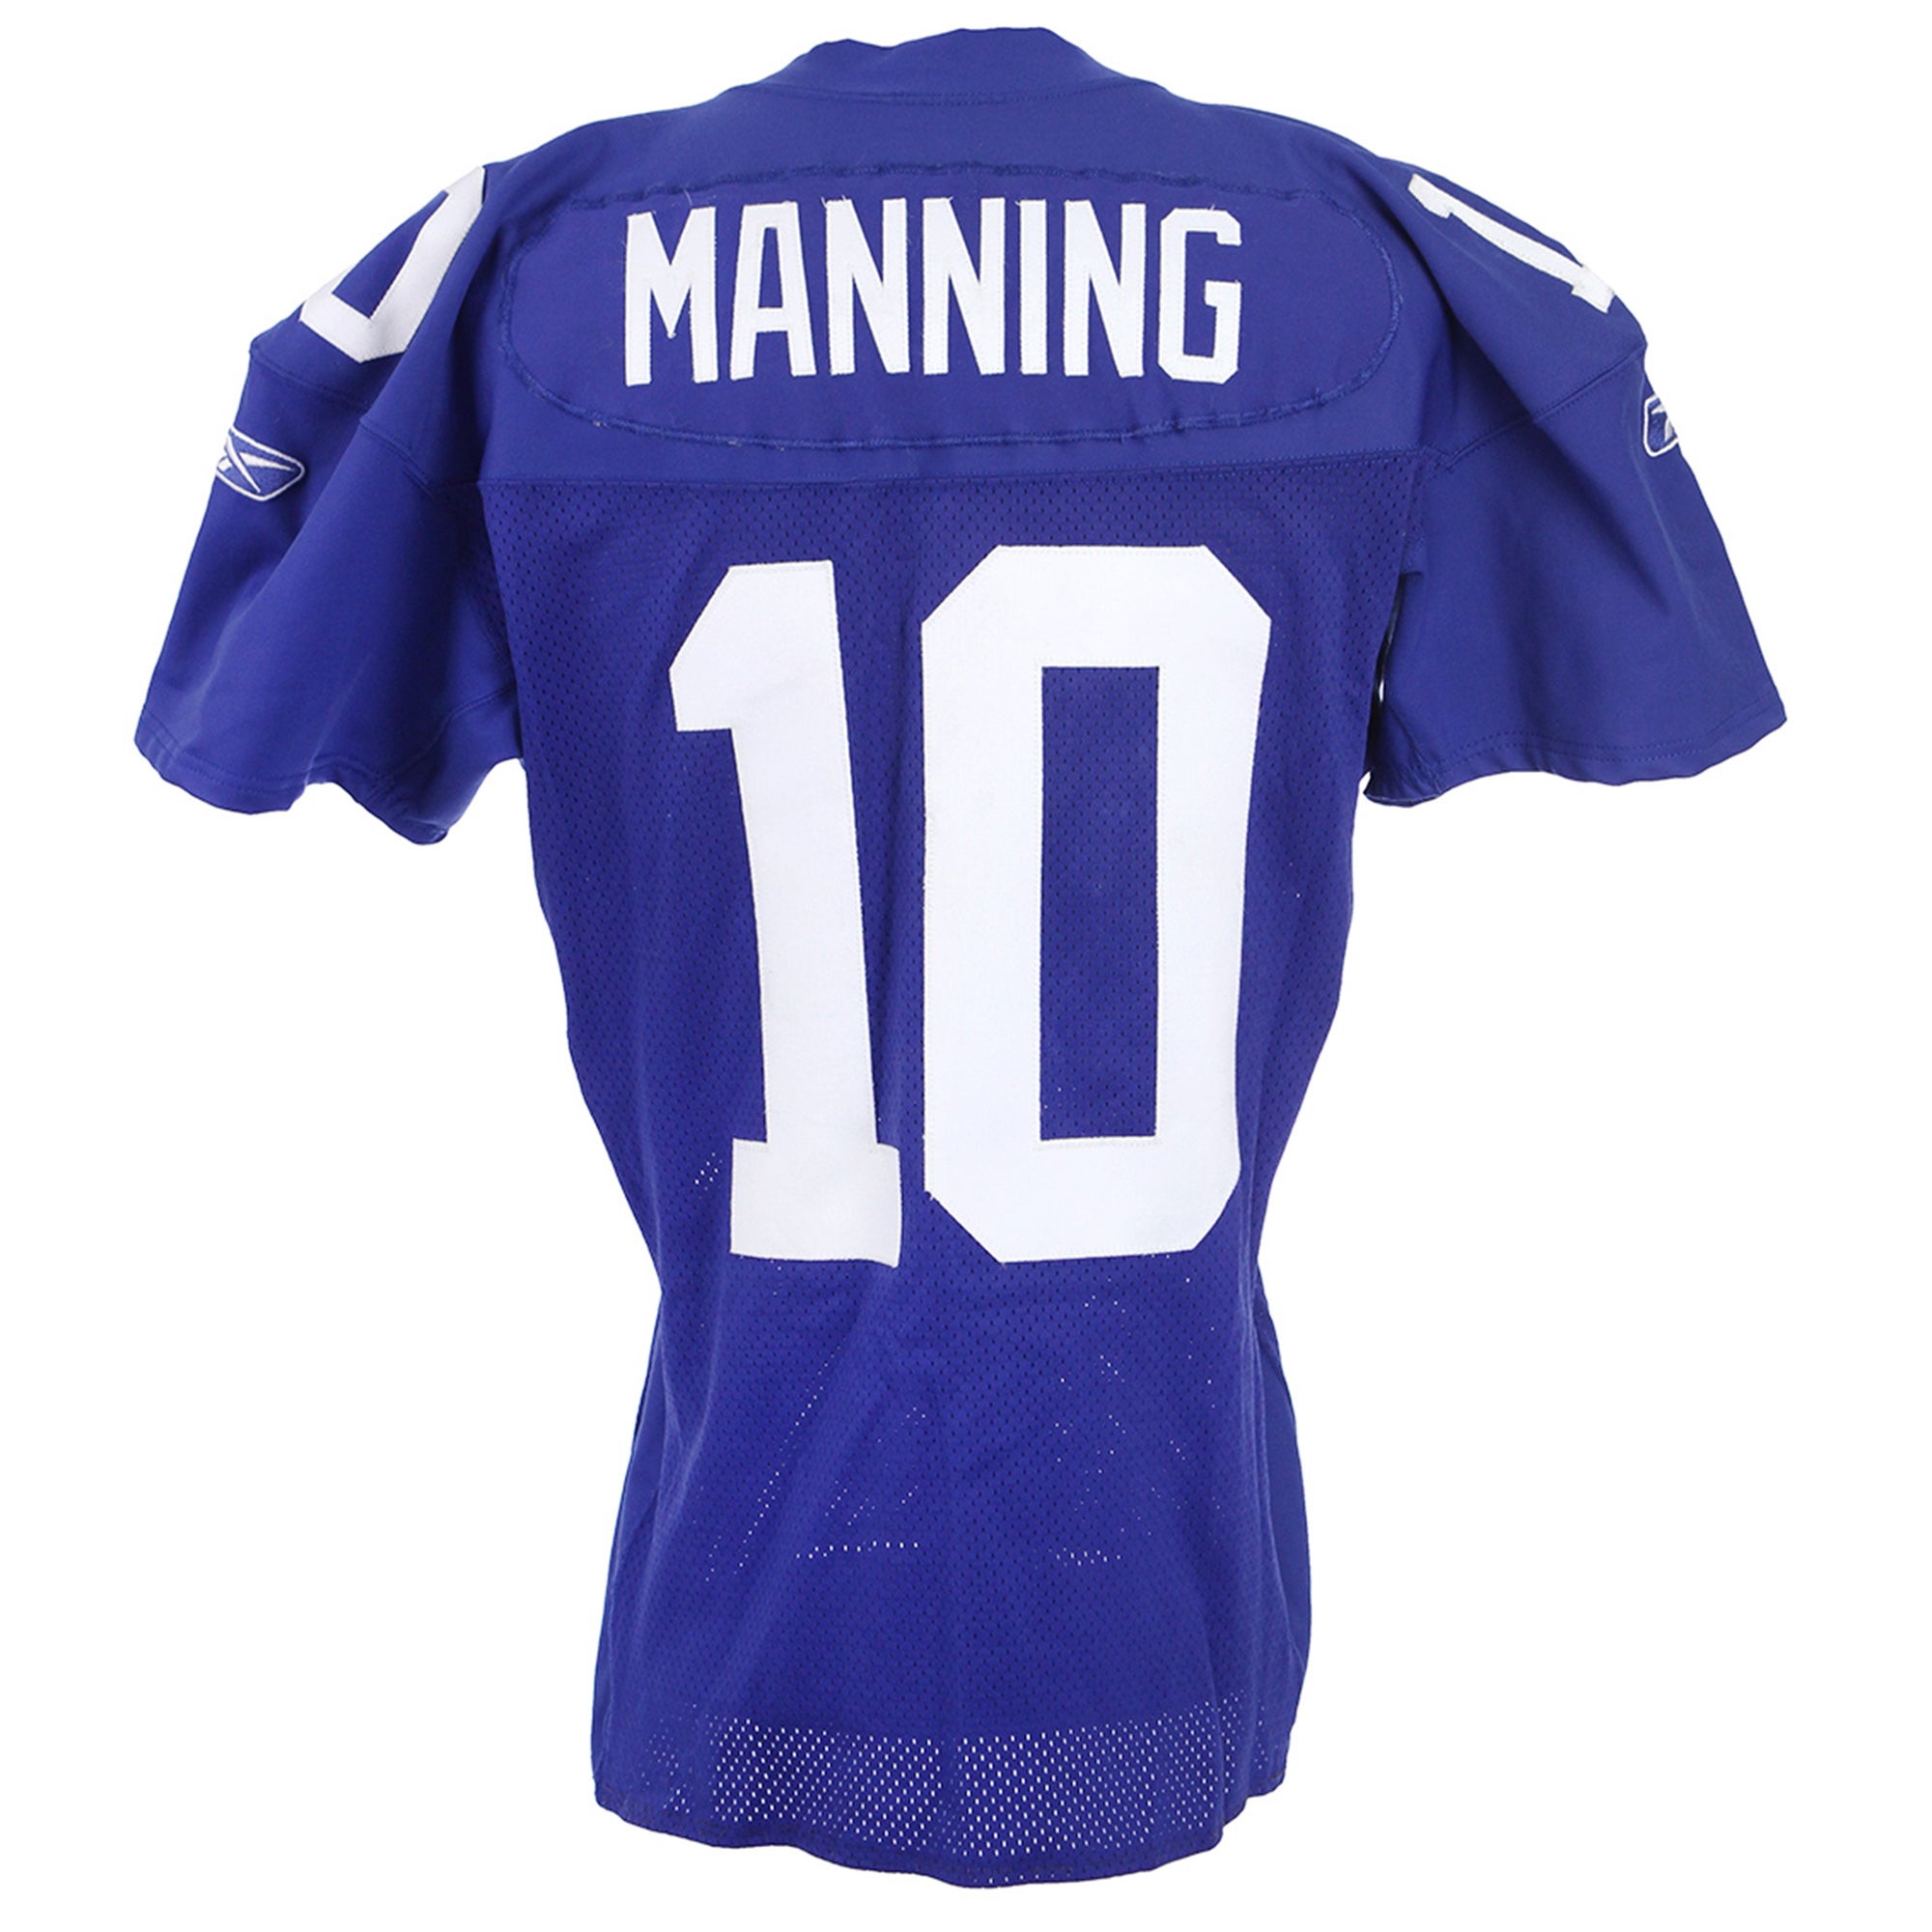 Eli Manning 2004 New York Giants Game Worn Jersey